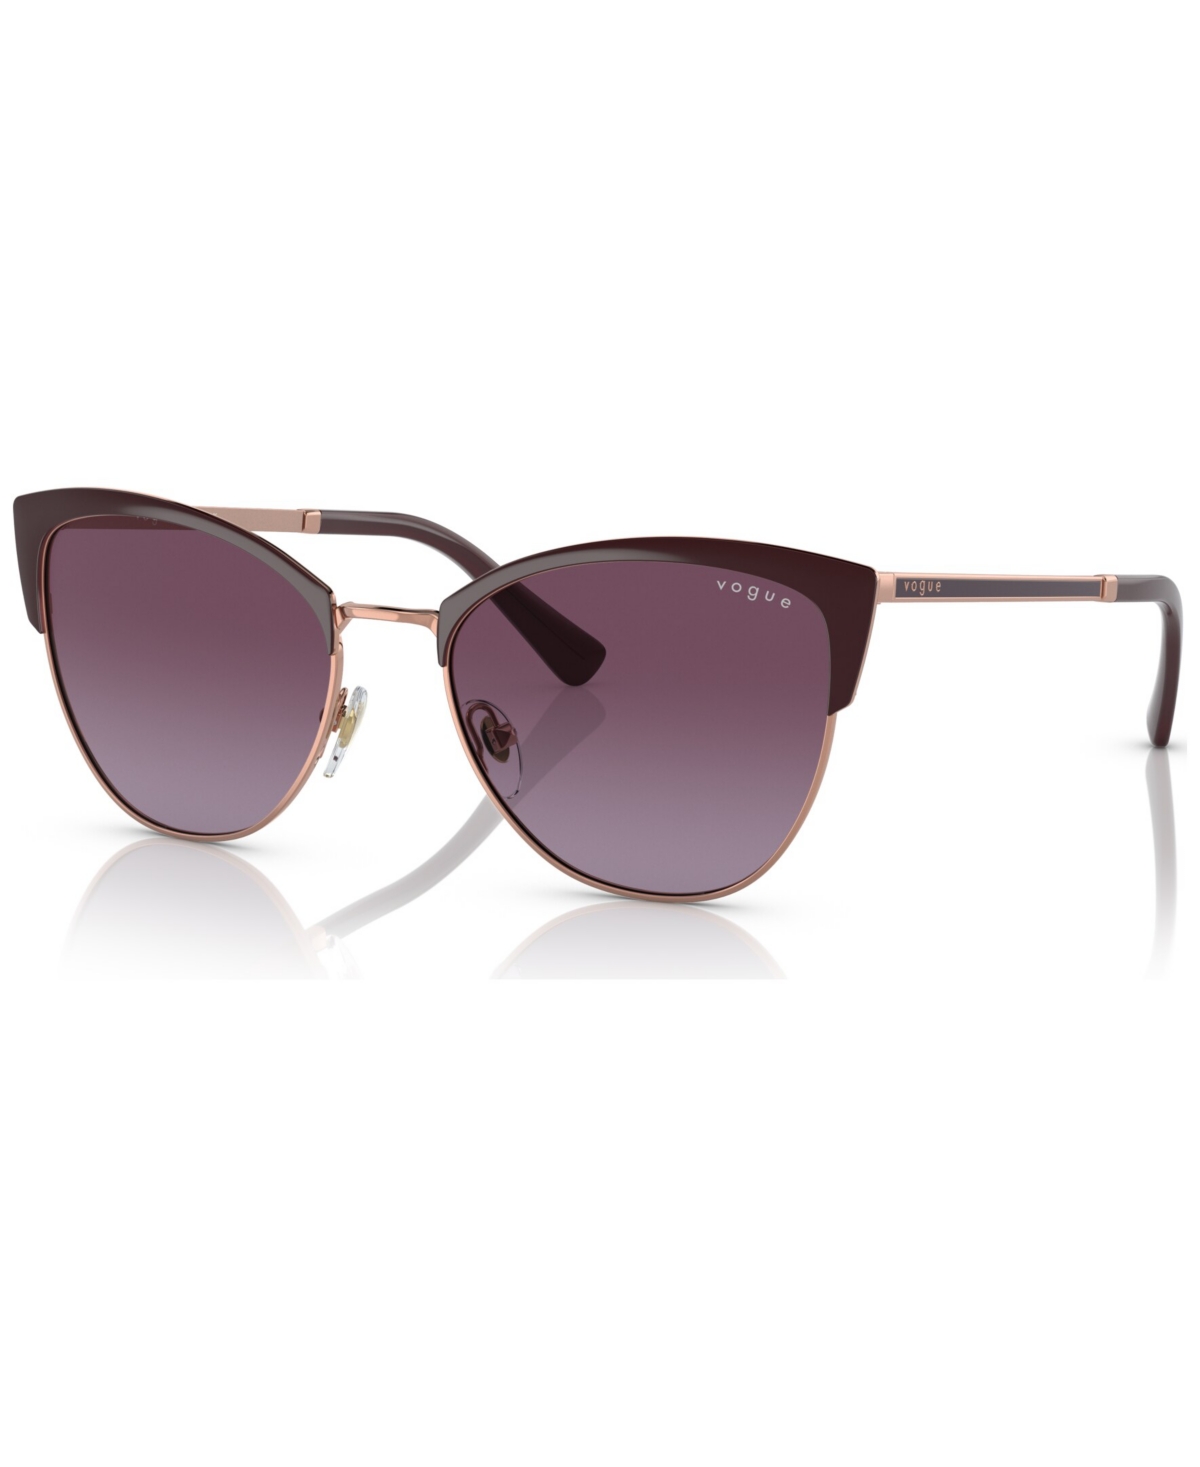 Vogue Eyewear Women's Sunglasses, Vo4251s In Top Bordeaux,rose Gold Tone